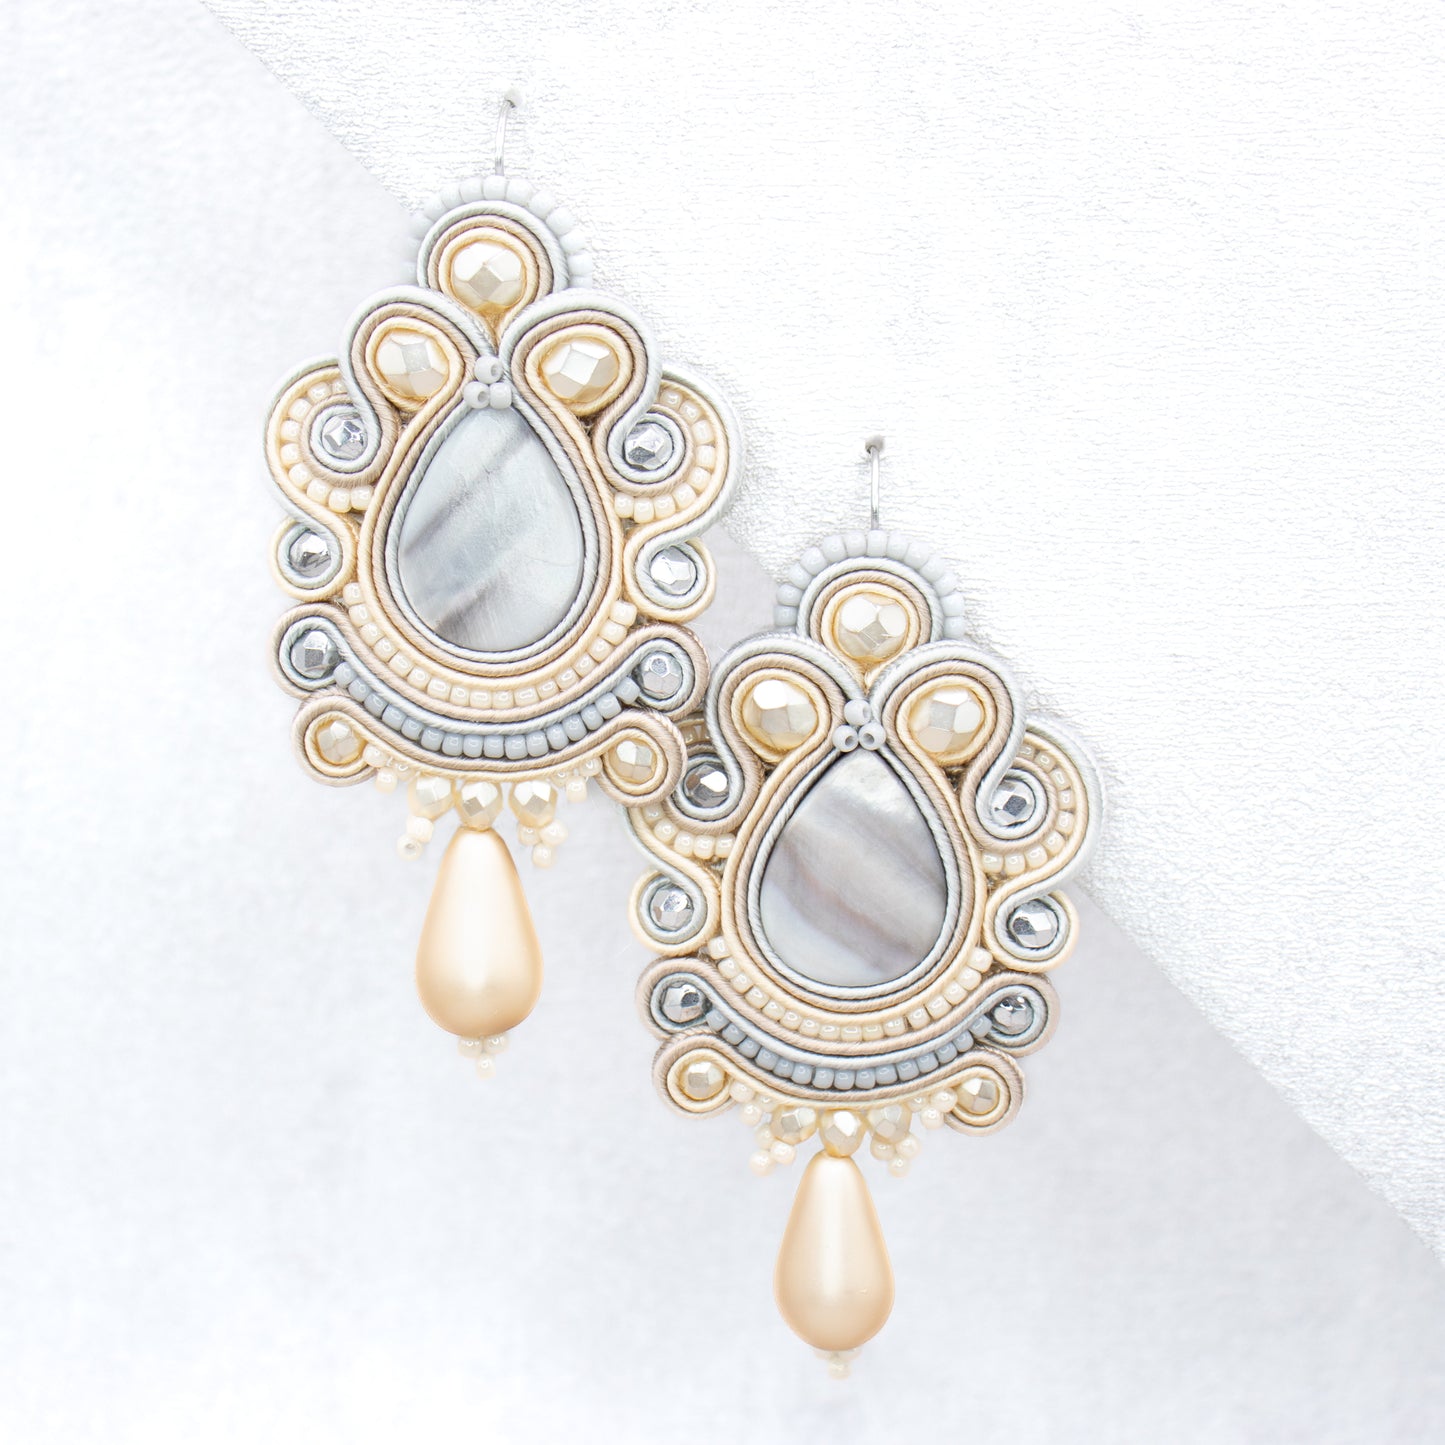 Sand, light grey and cream soutache earrings. Oriental and lightweight handmade earrings